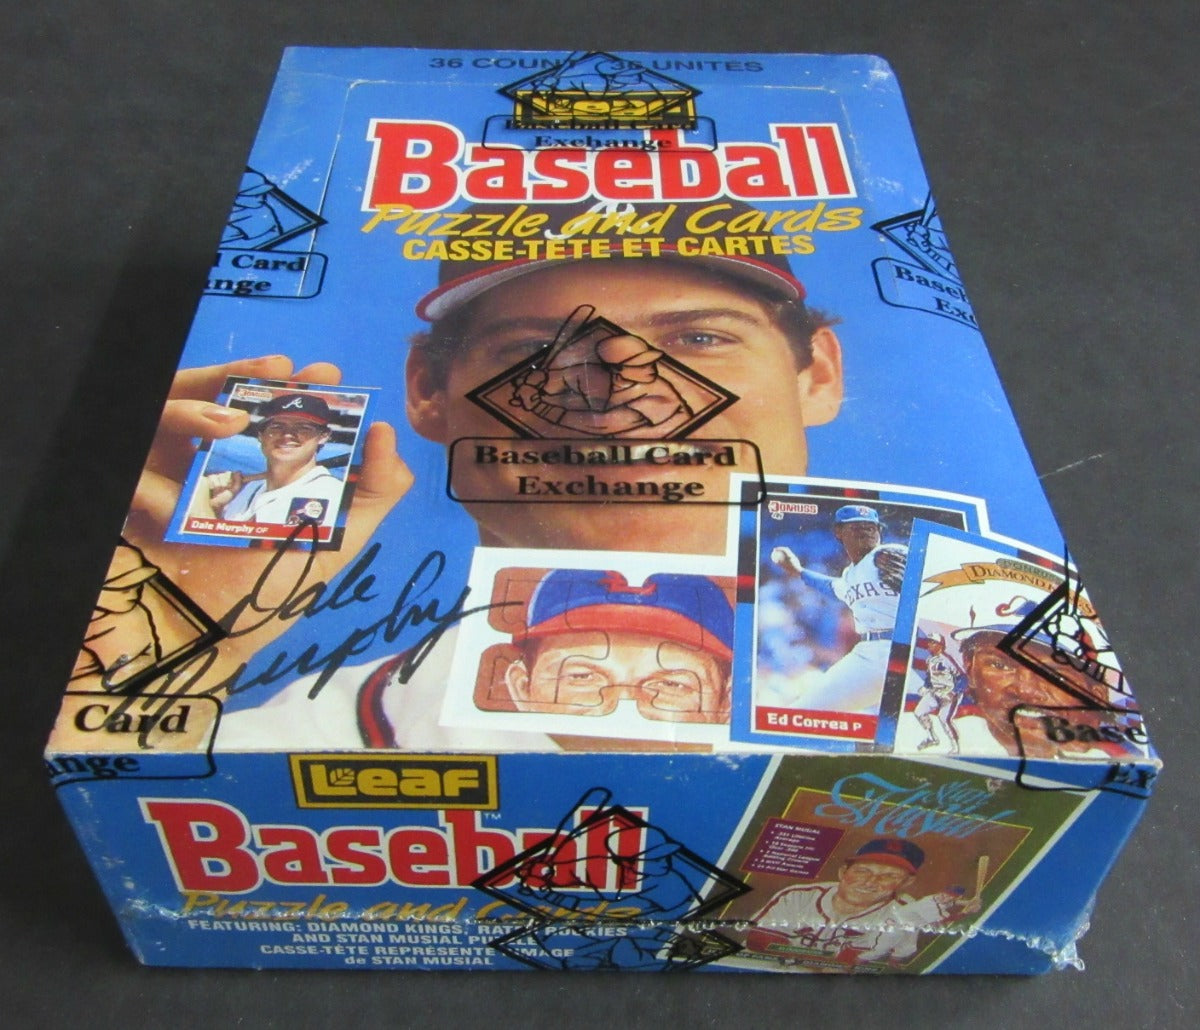 1988 Donruss Leaf Baseball Unopened Wax Box (FASC)